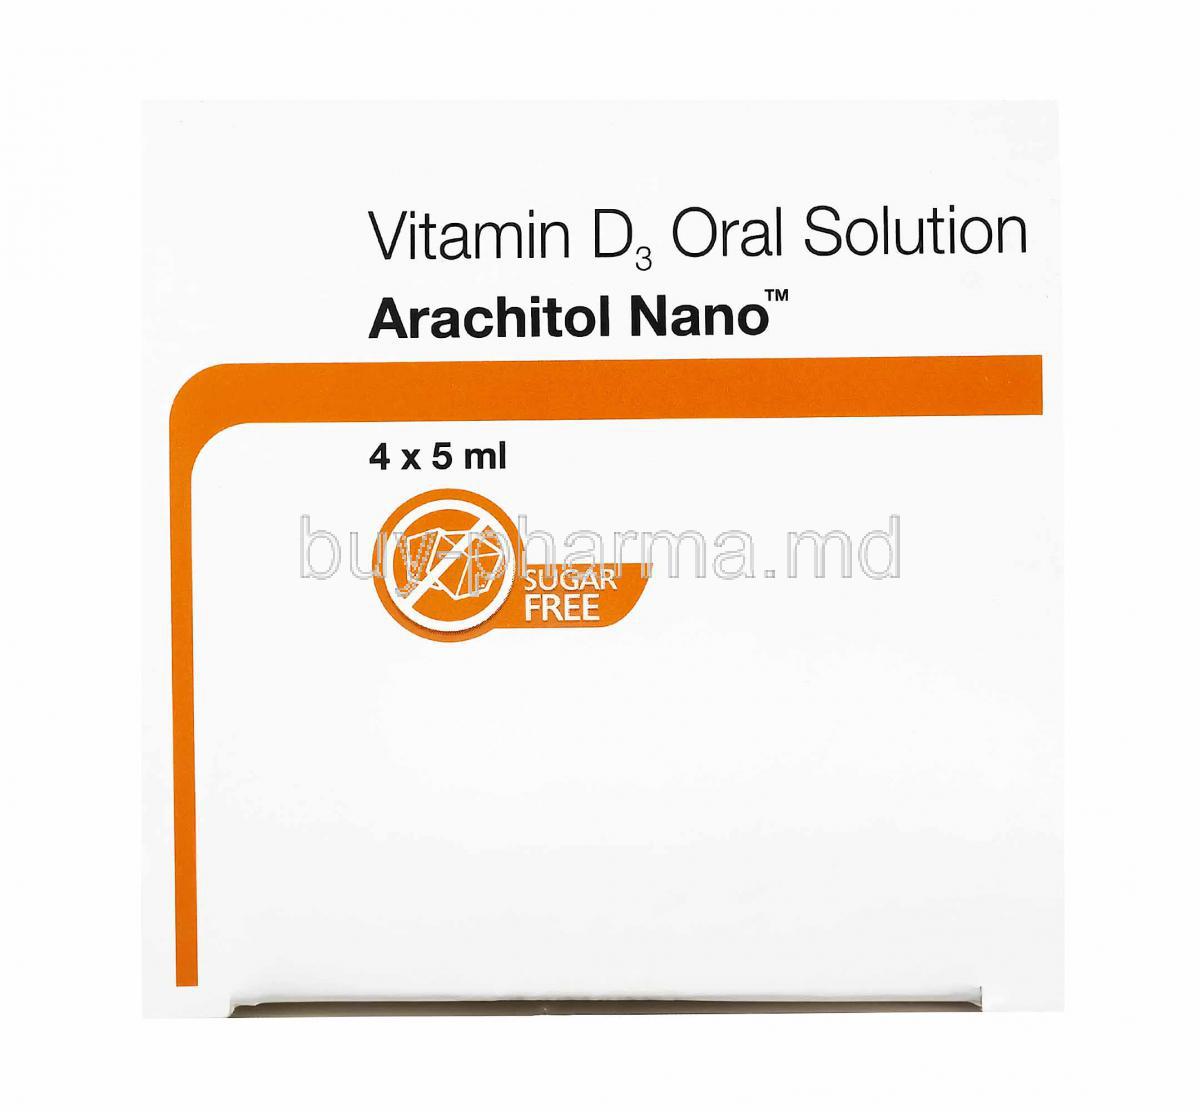 Buy Arachitol Nano Oral Solution Cholecalciferol Online